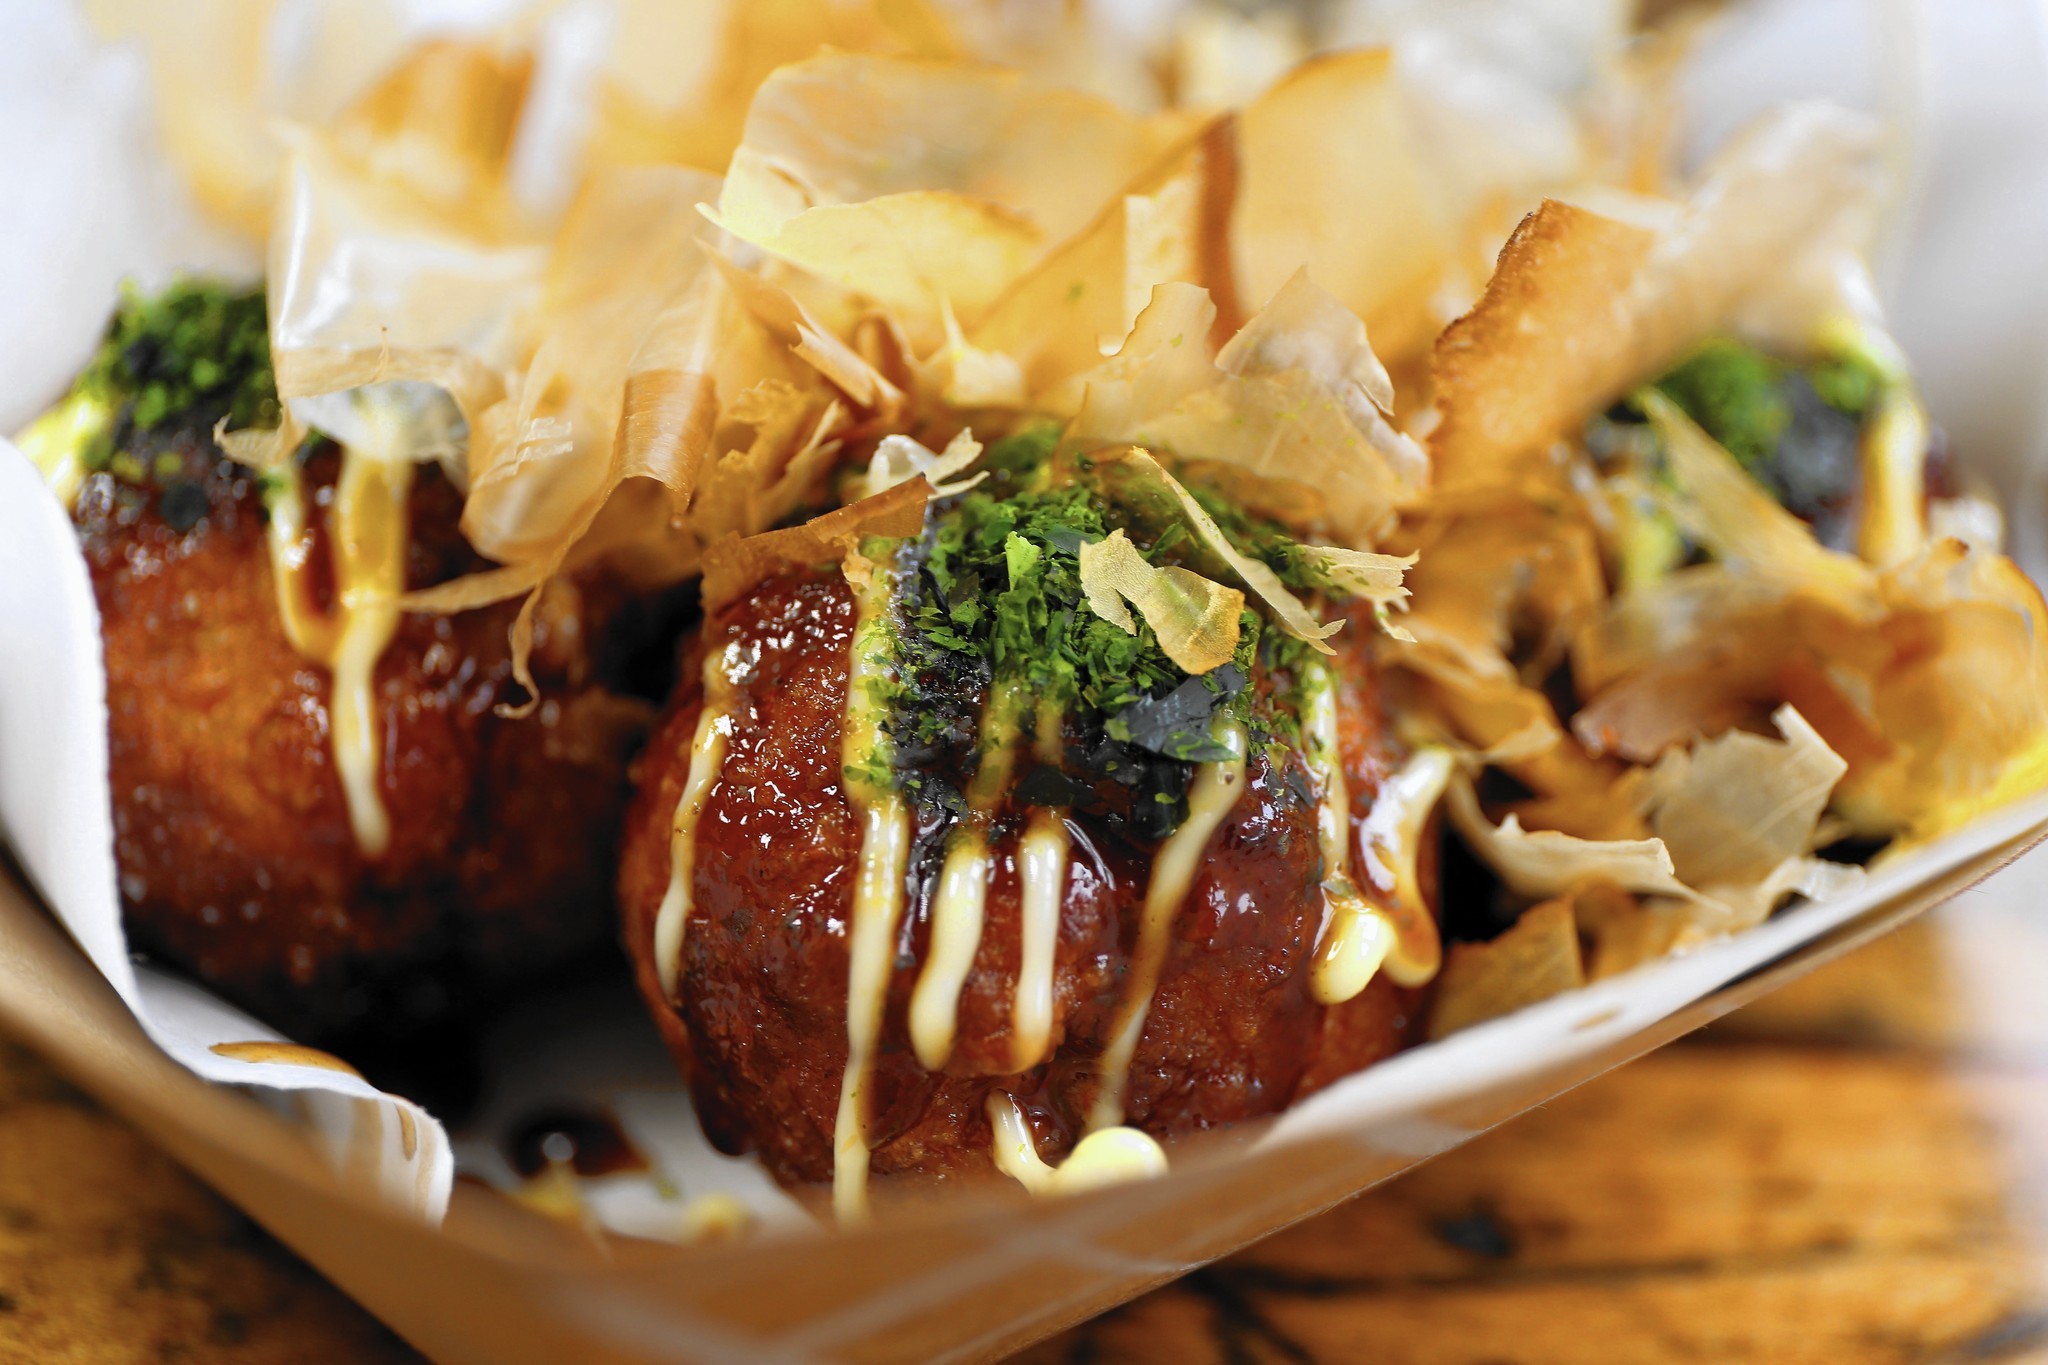 Japanese street food rides into Chicago on ramen's success - Chicago Tribune